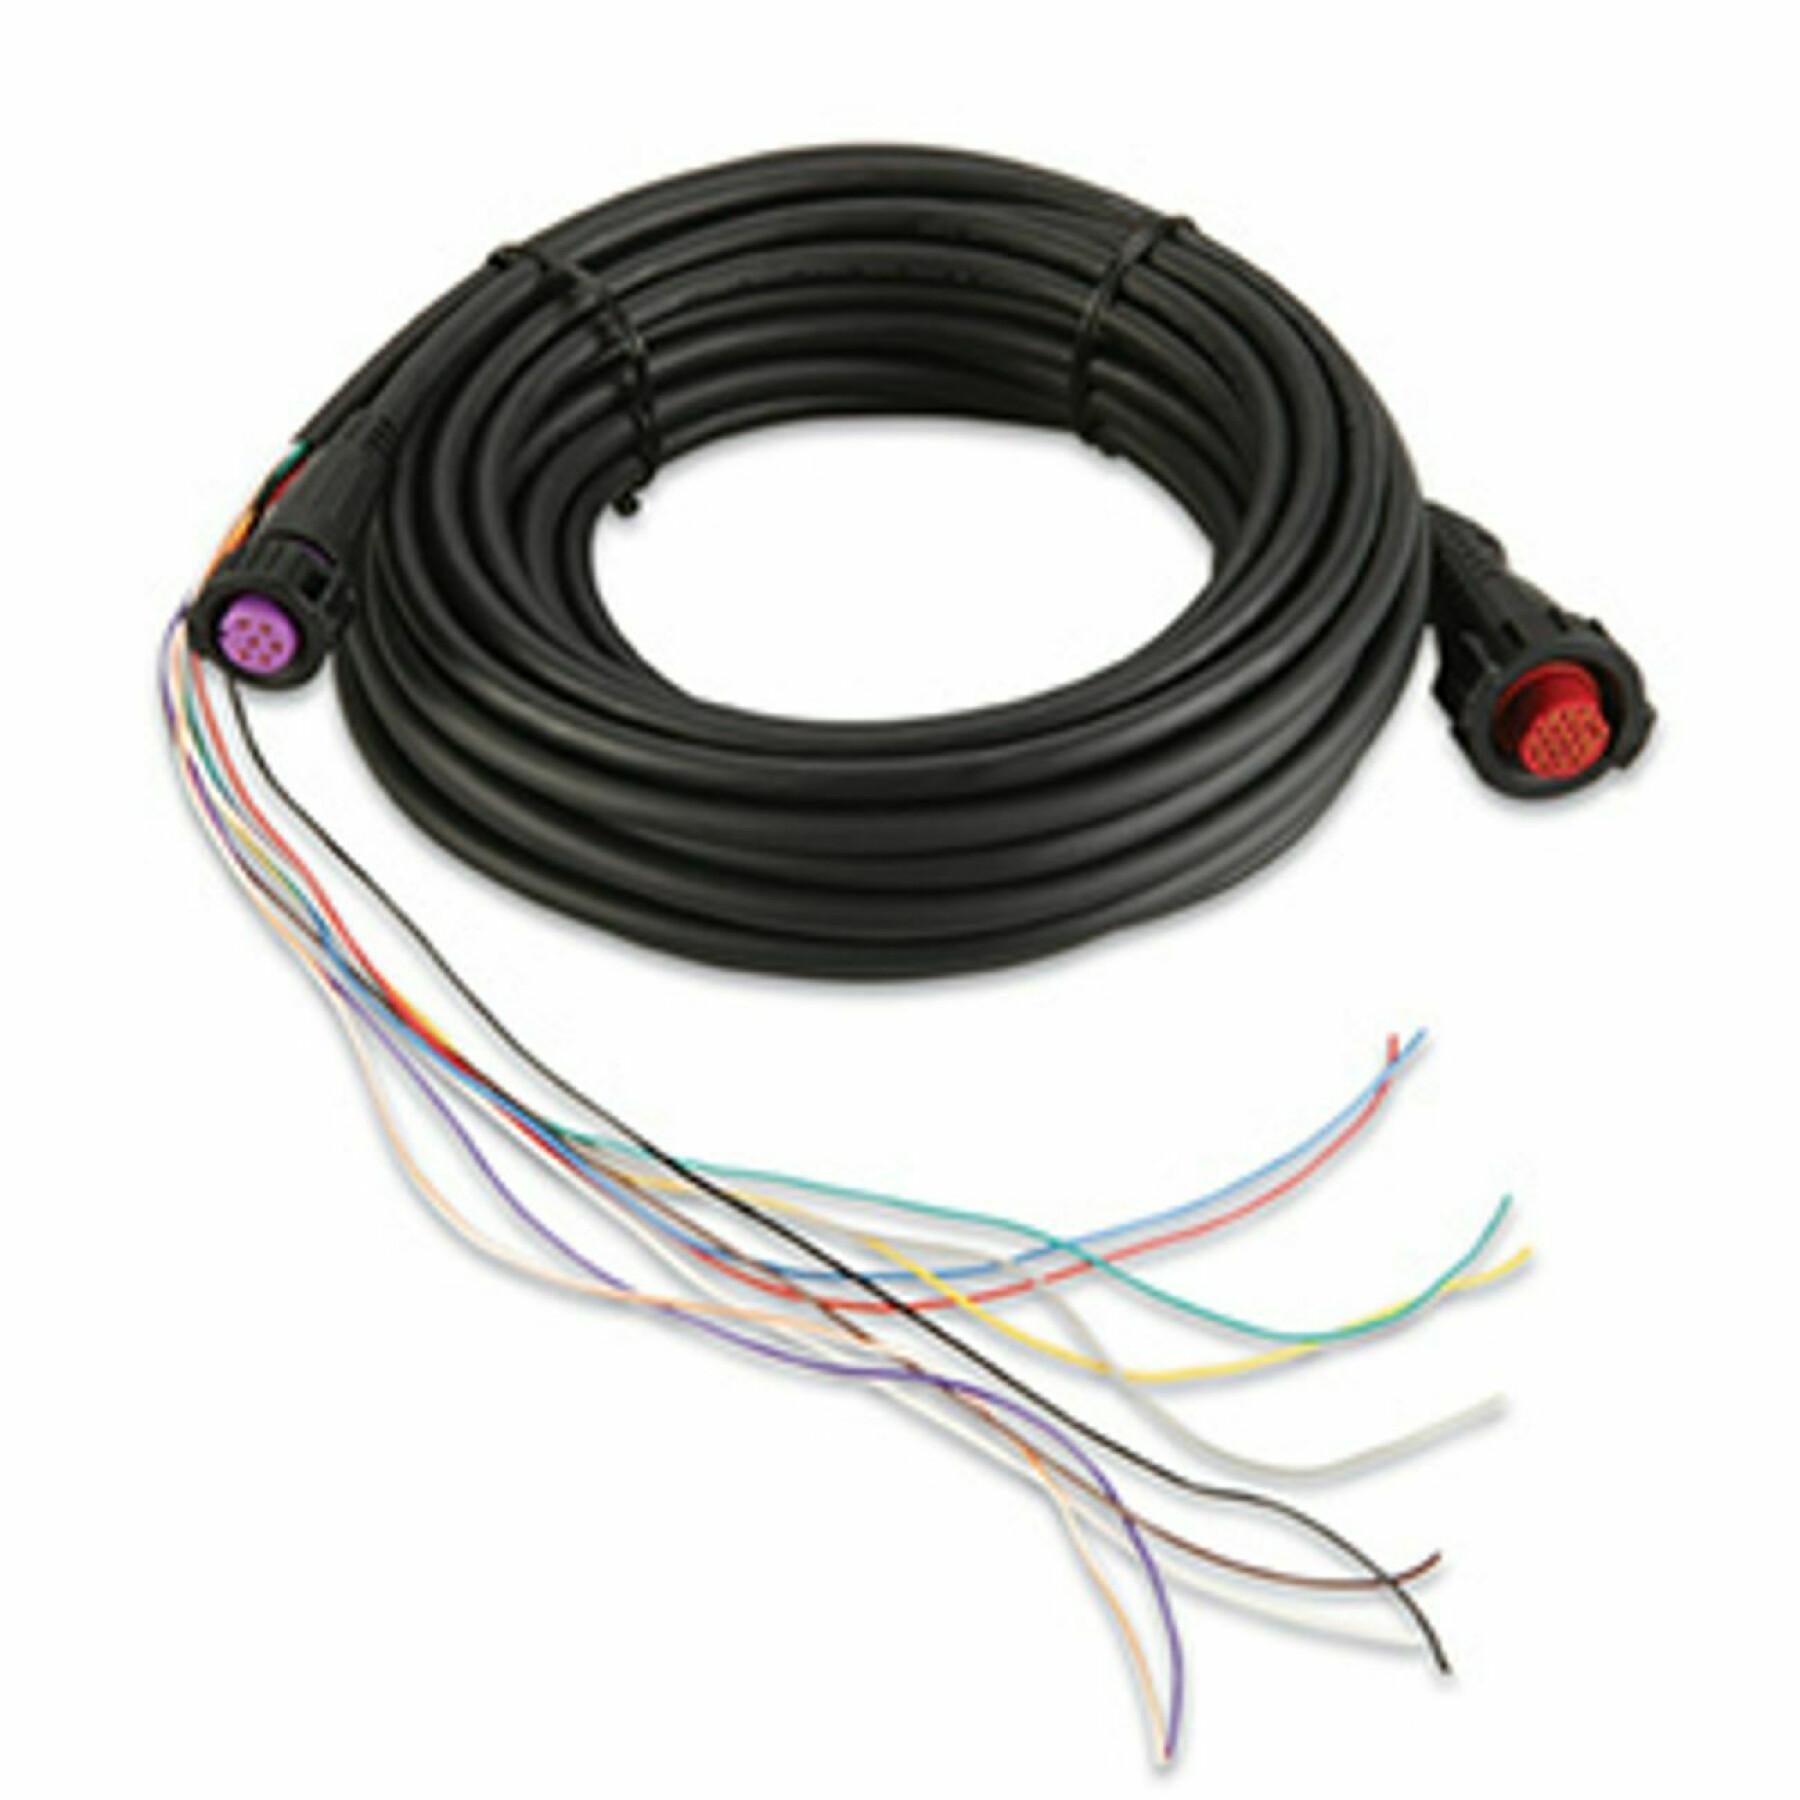 Kabel Garmin ccu/ecu interconnect cable